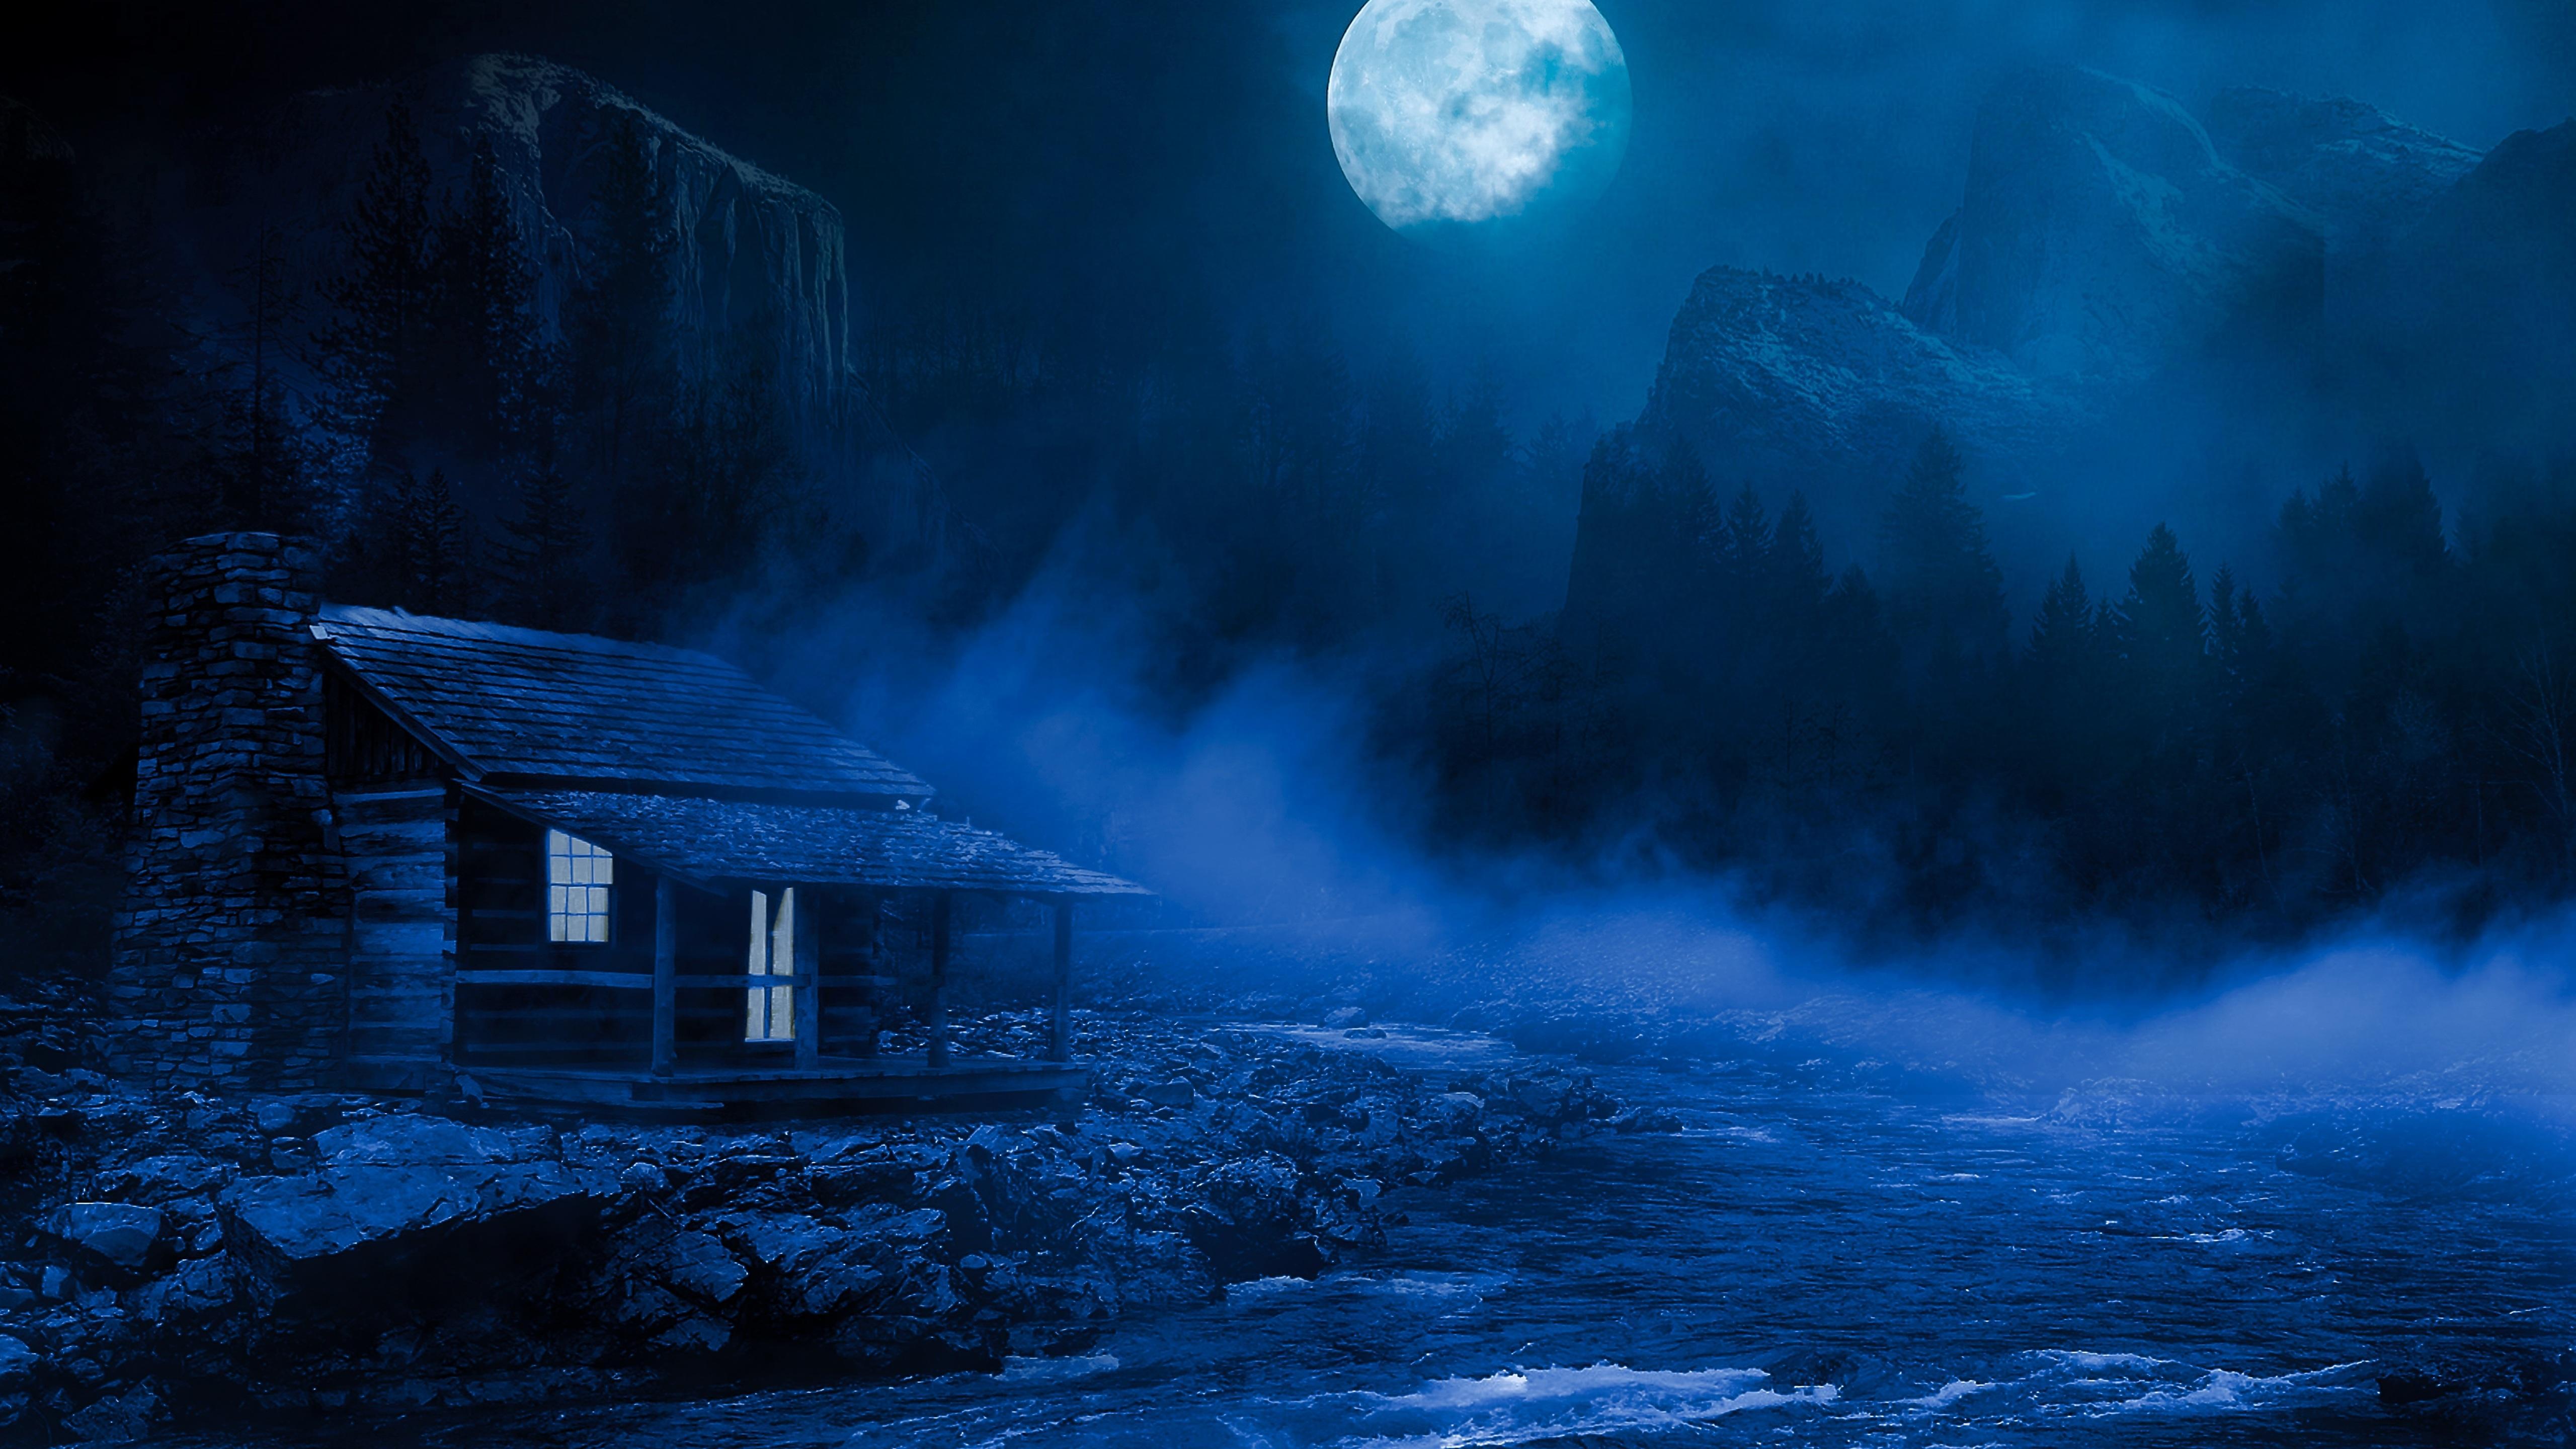 House Night Full Moon Fantasy Lake Flowing On Side 5k 5k